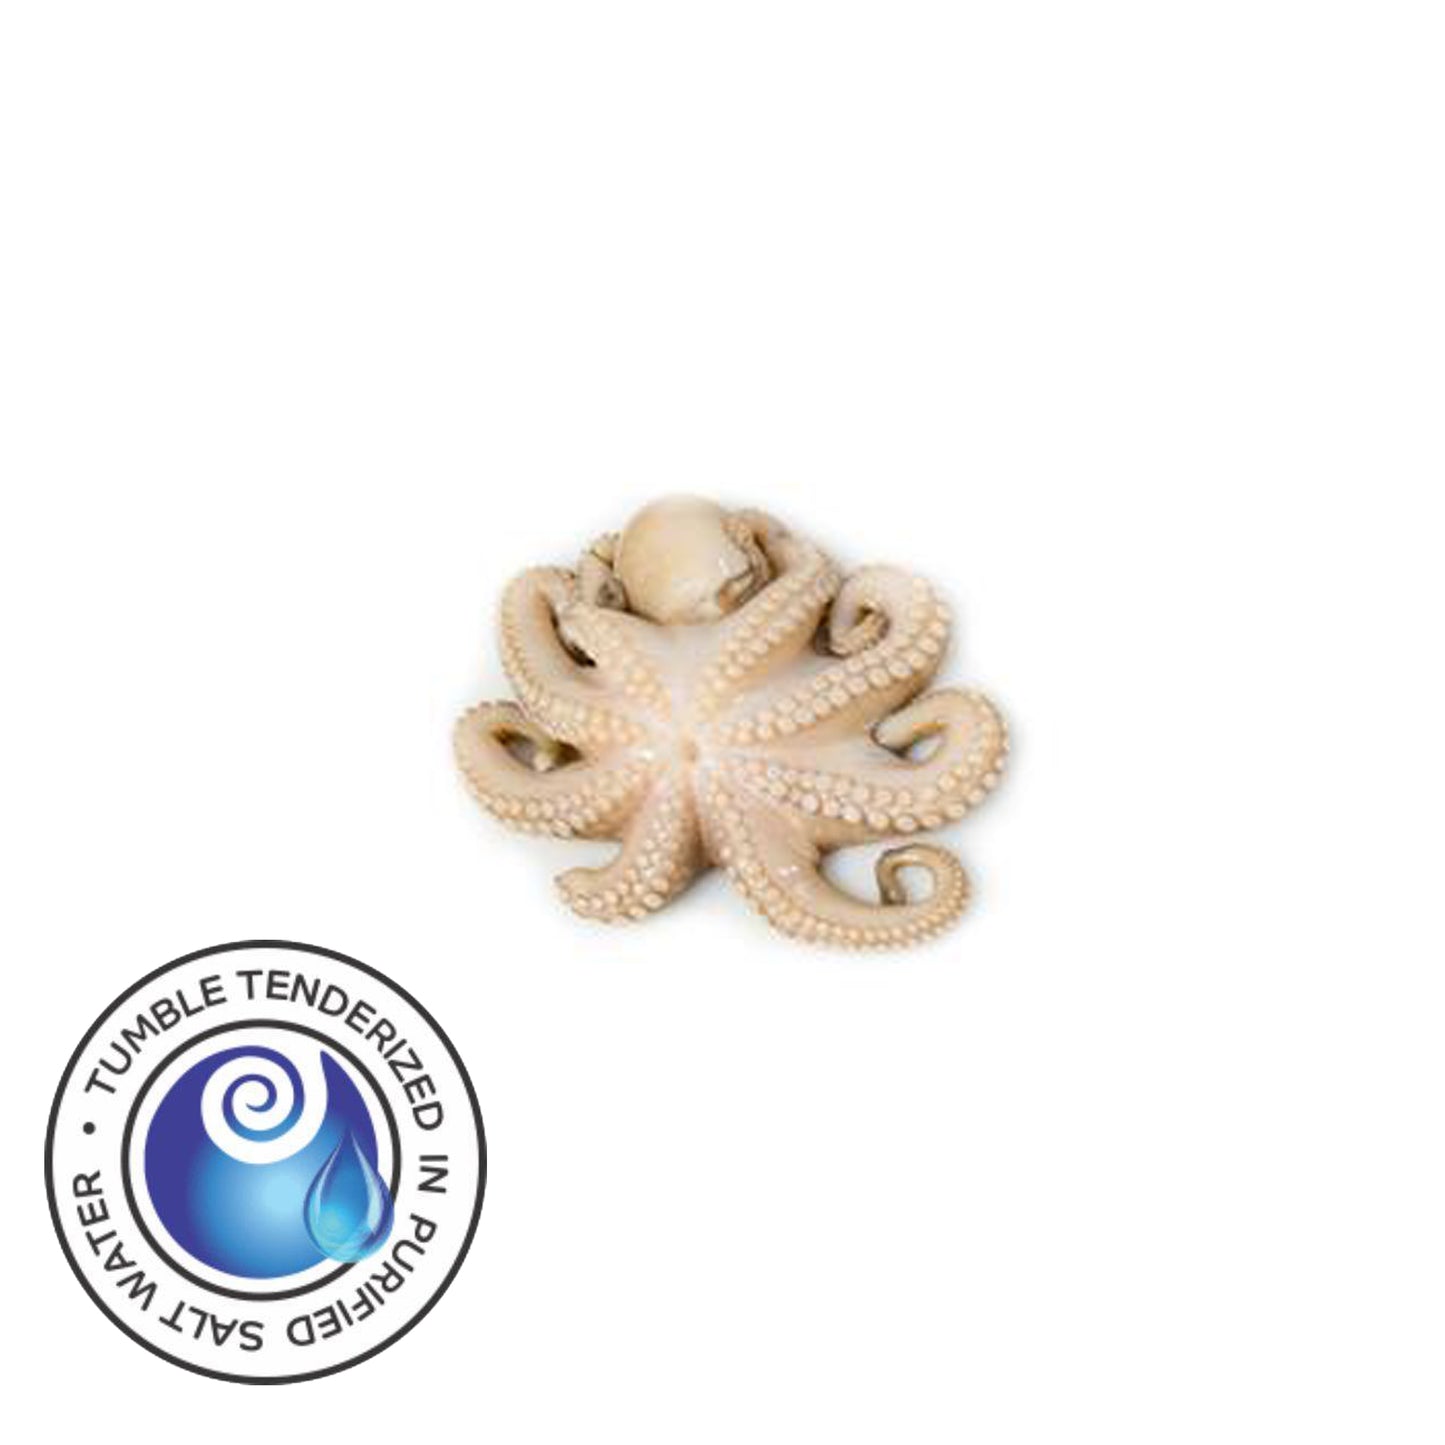 Tenderized Wild Octopus 5-10 oz (T9)